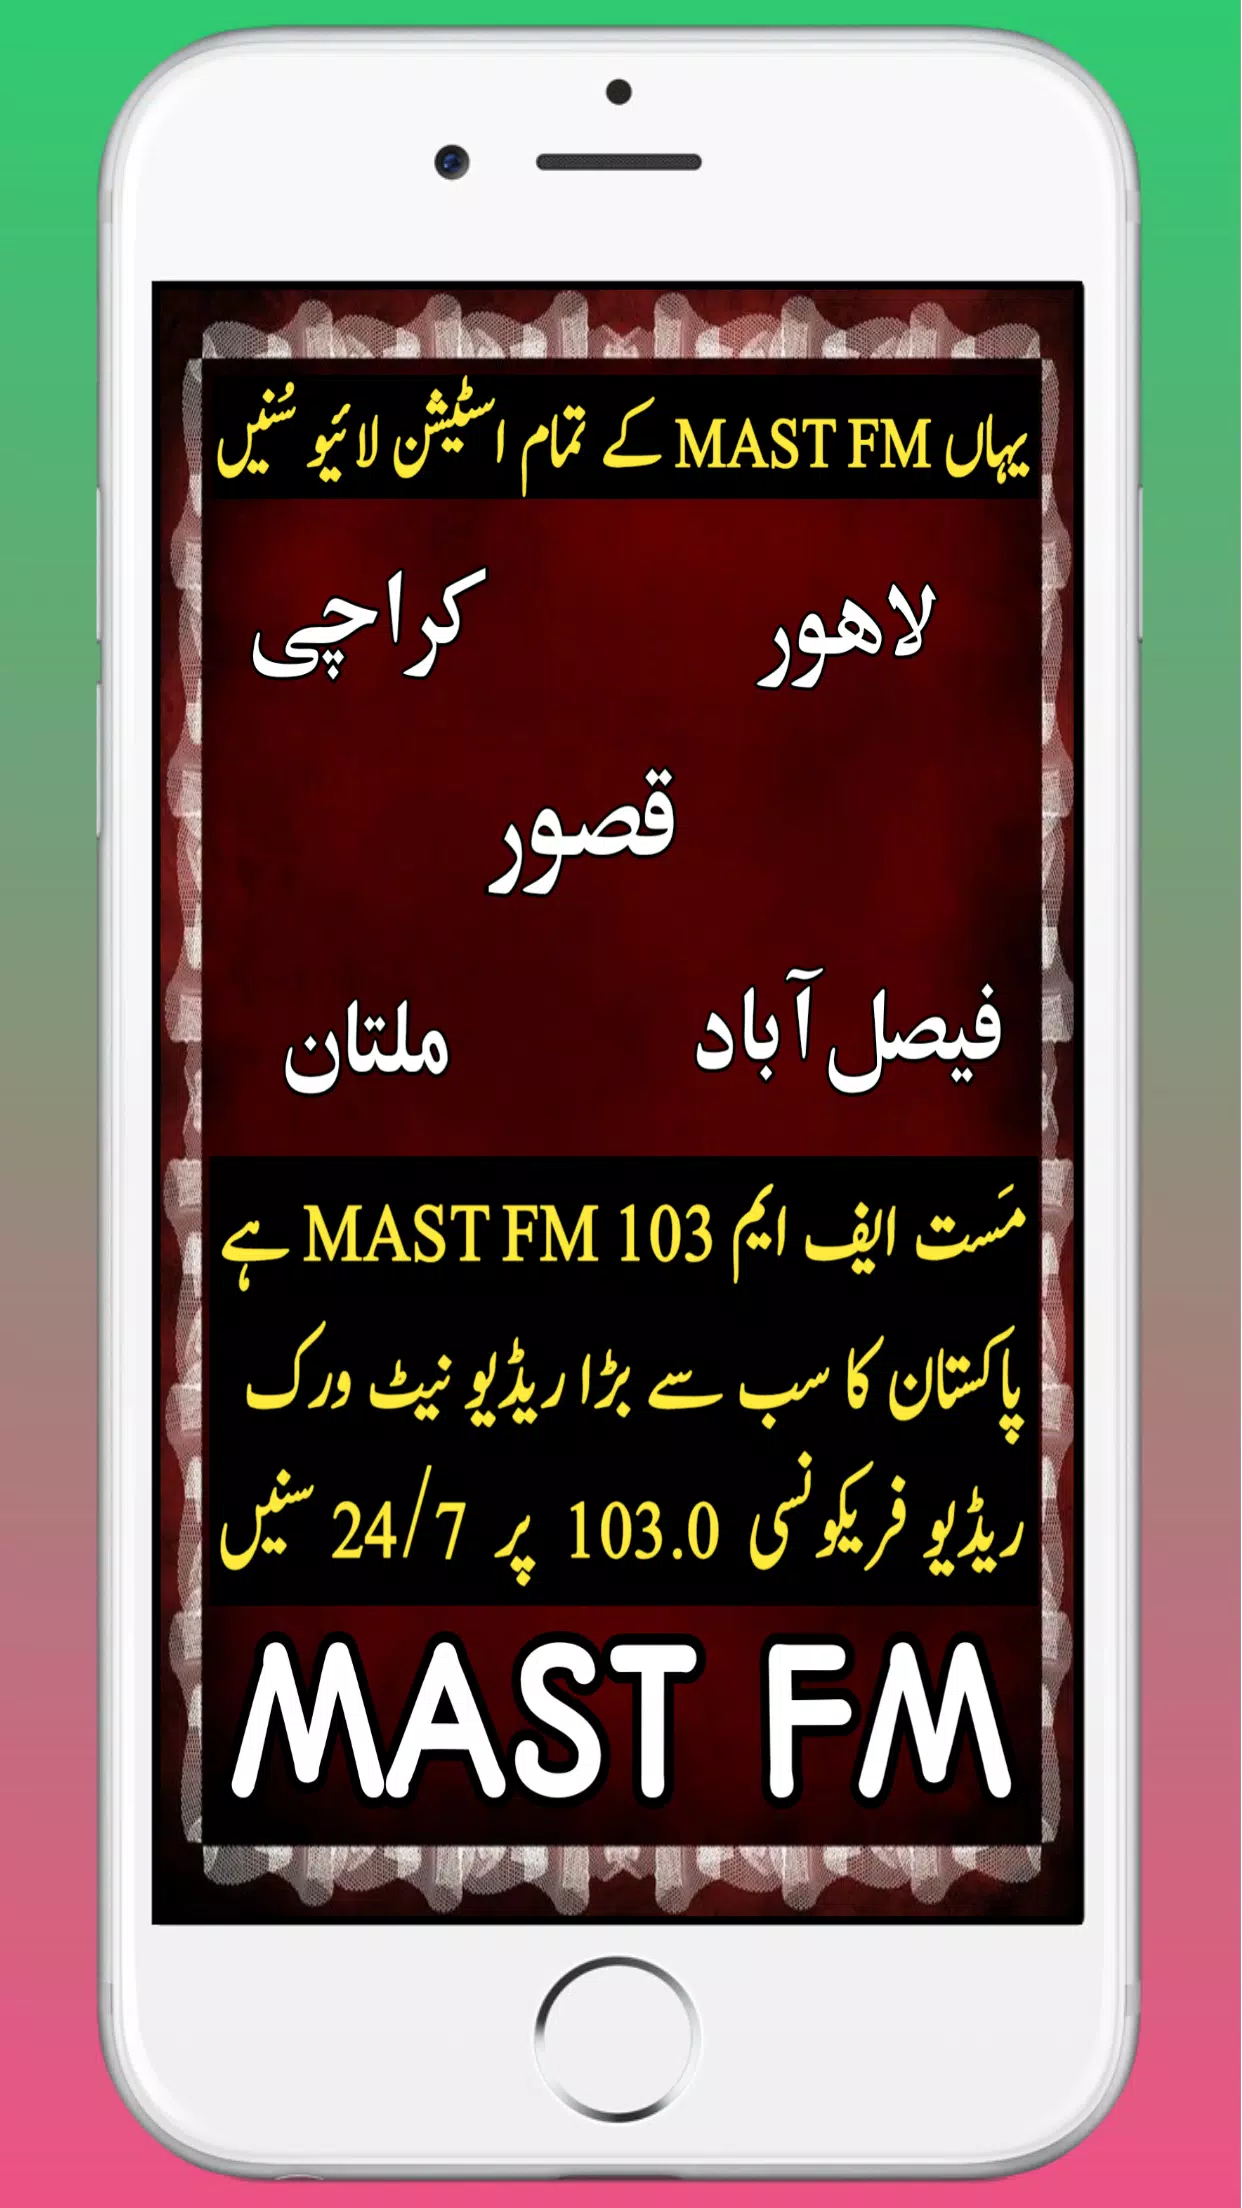 Mast FM 103 Radio Pakistan APK for Android Download